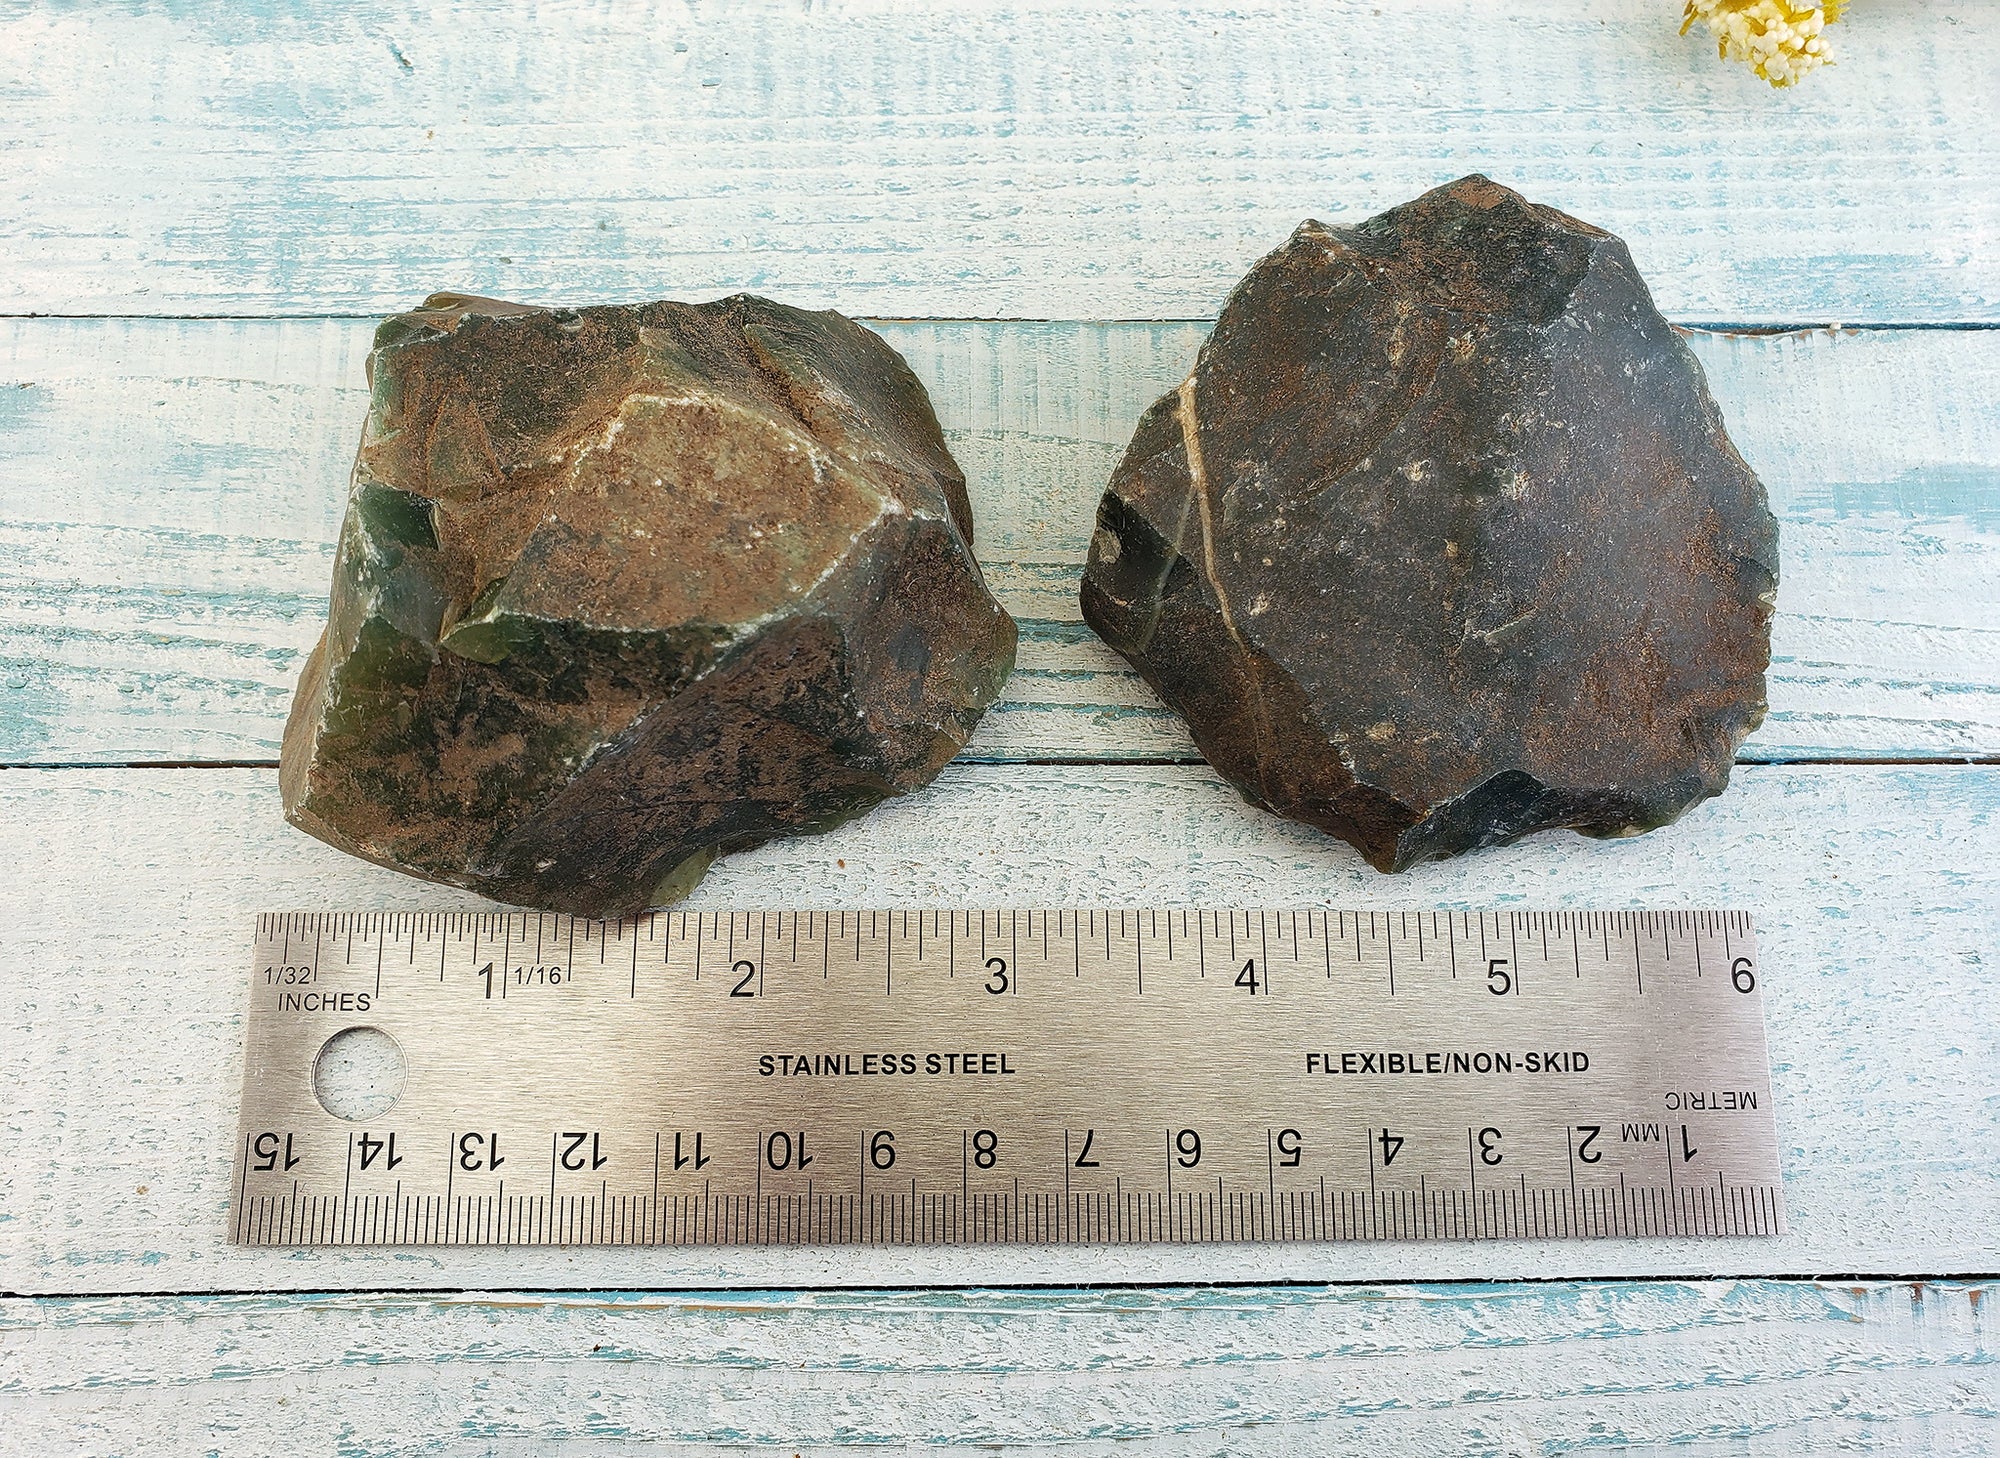 rough fancy jasper stones by ruler, showing estimate of size